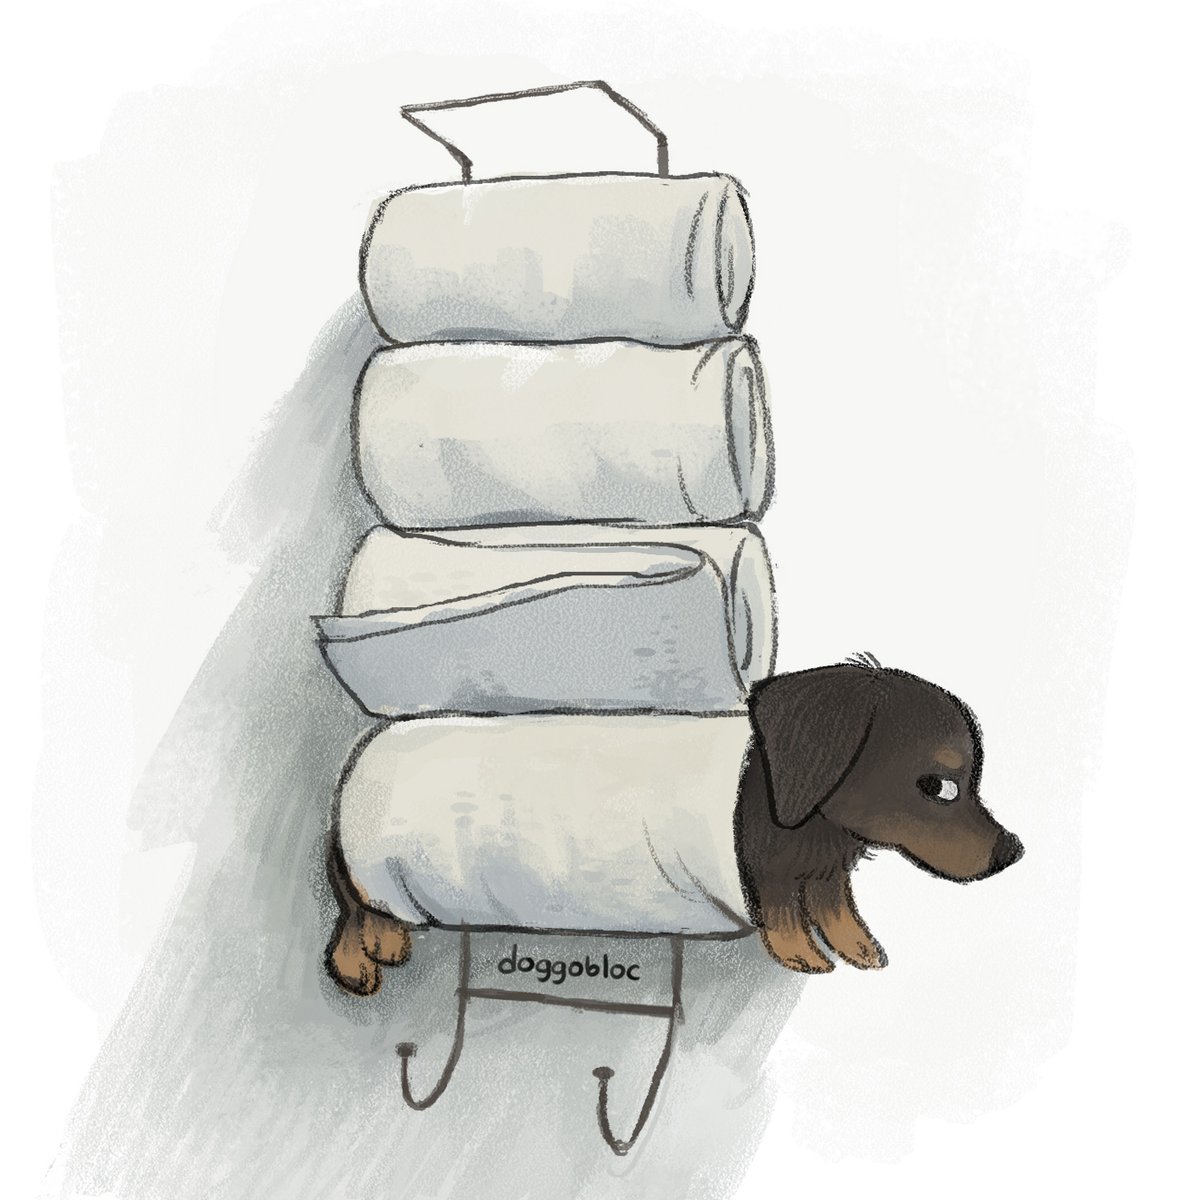 How to quick dry your weenie

#dog #doggo #weeniedog #Dachshund #DogLover